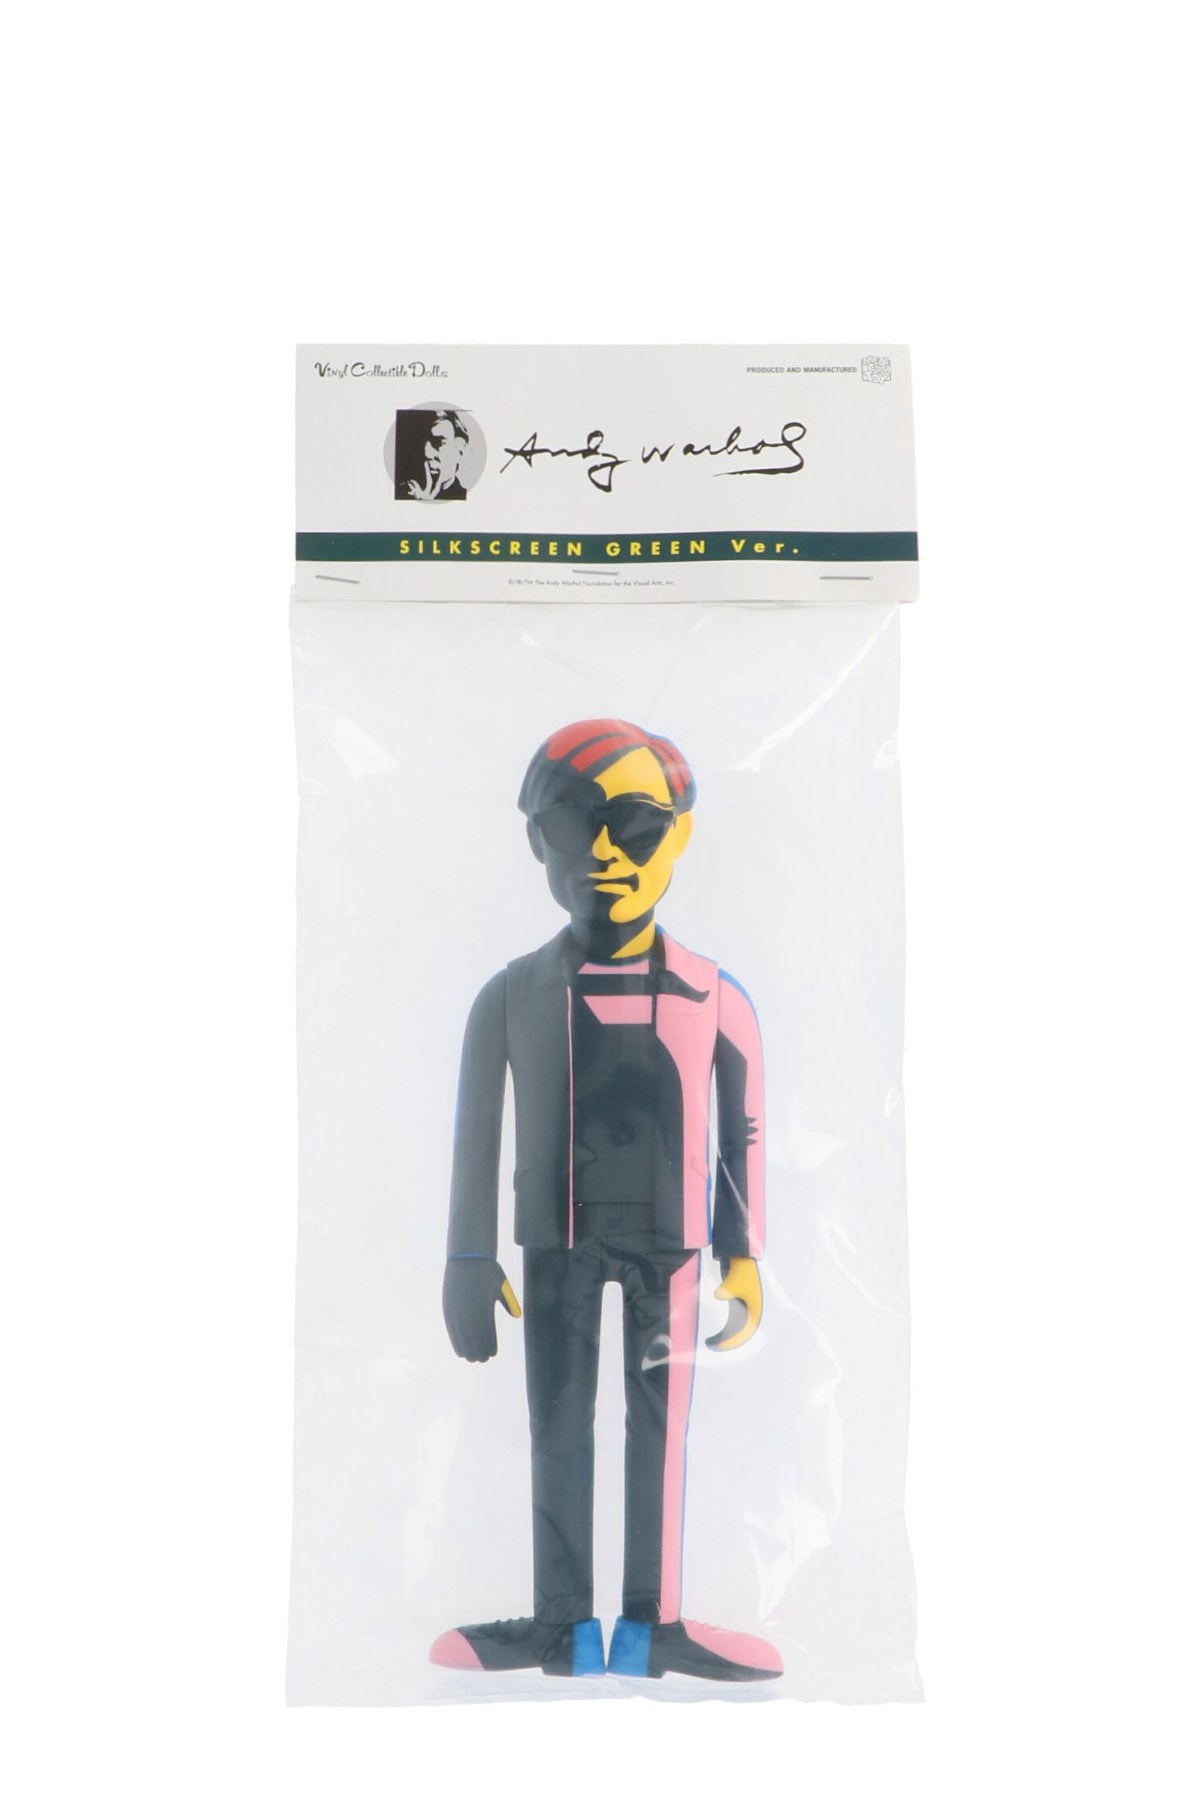 MEDICOM TOY Andy Warhol Vinyl Collectible Dolls Silkgreen Green Ver.